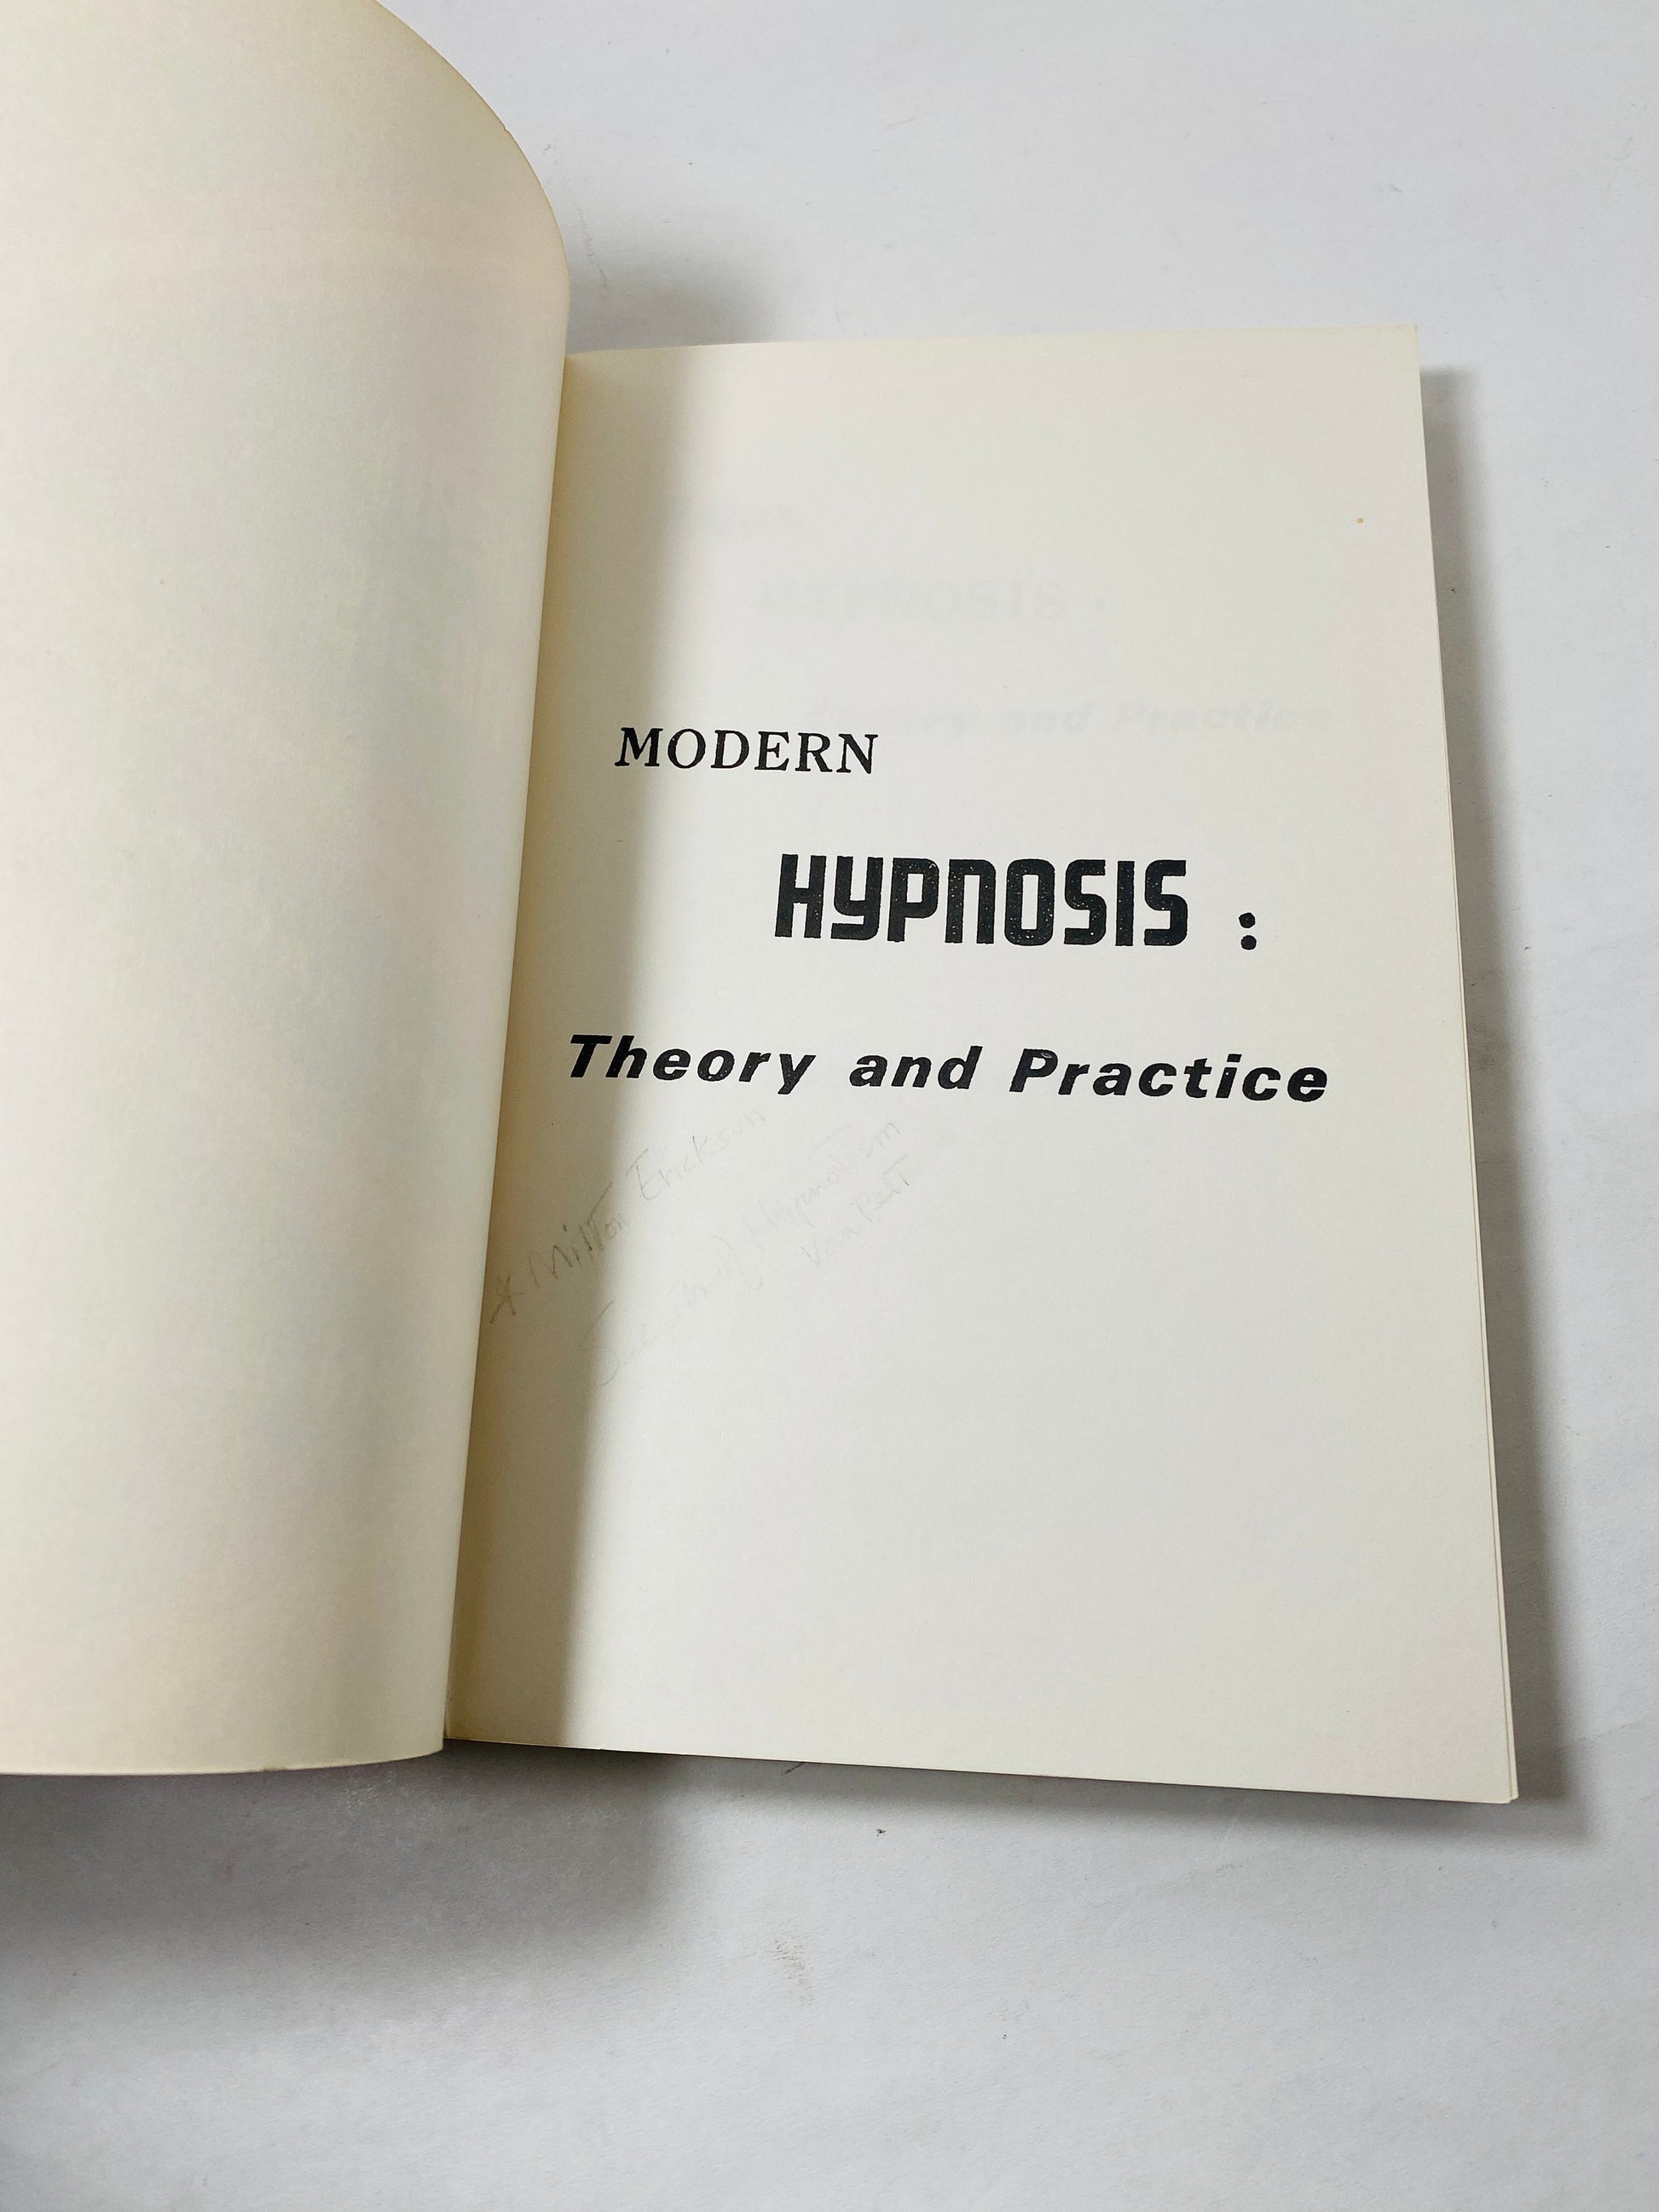 Modern Hypnosis vintage paperback book by Masud Ansari circa 1982 Mind Control Method FIRST paperback printing.